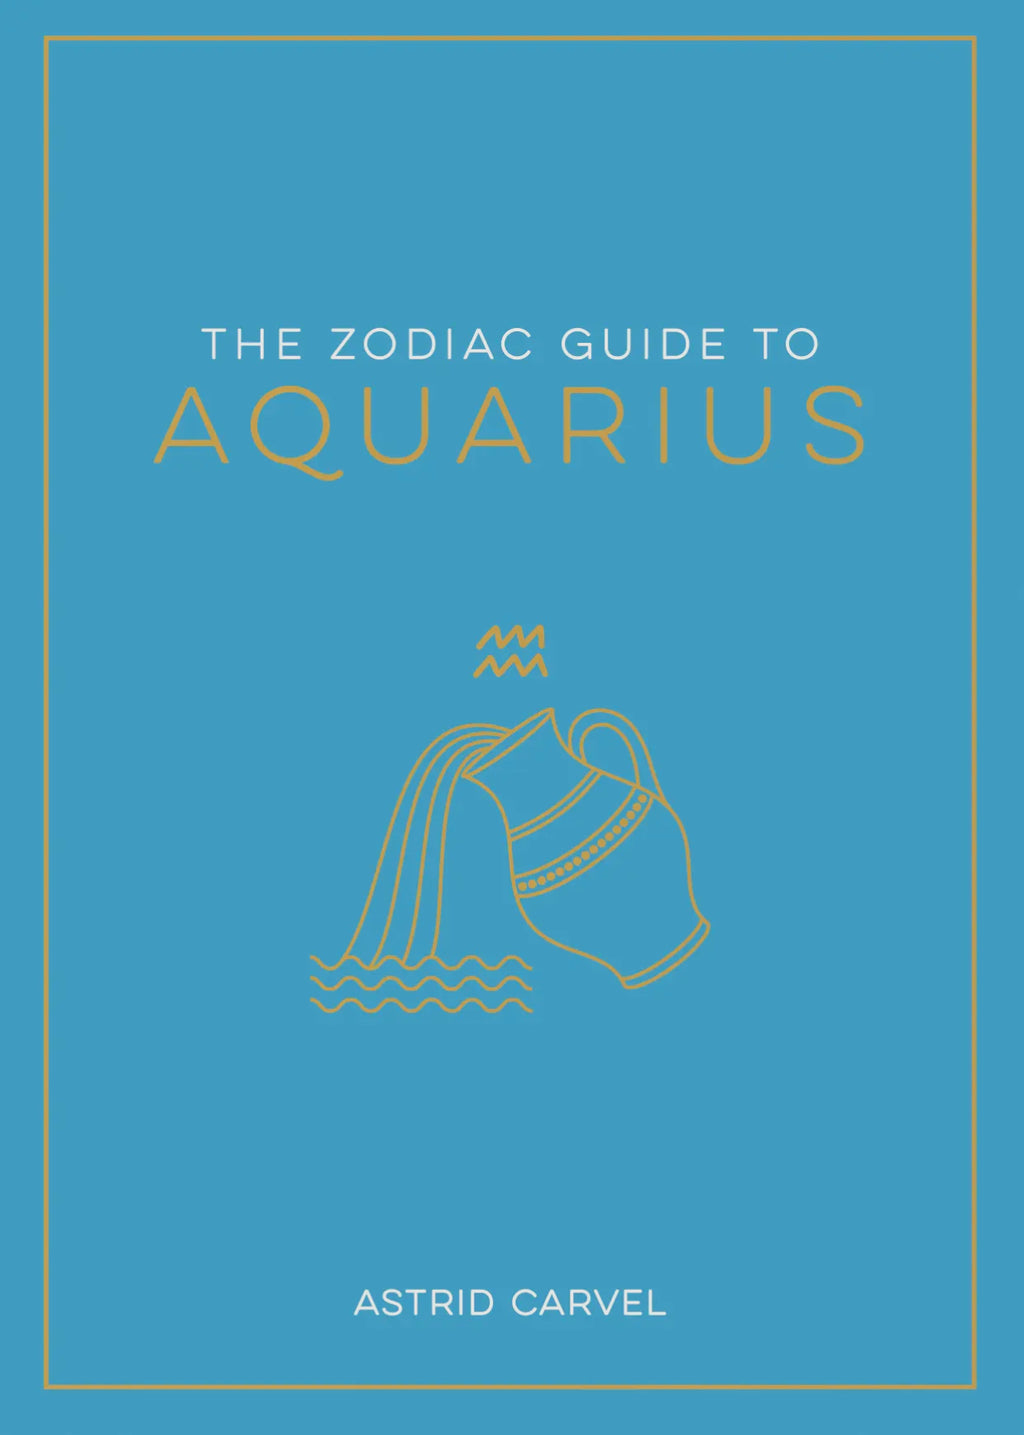 The Zodiac Guide to: Aquarius